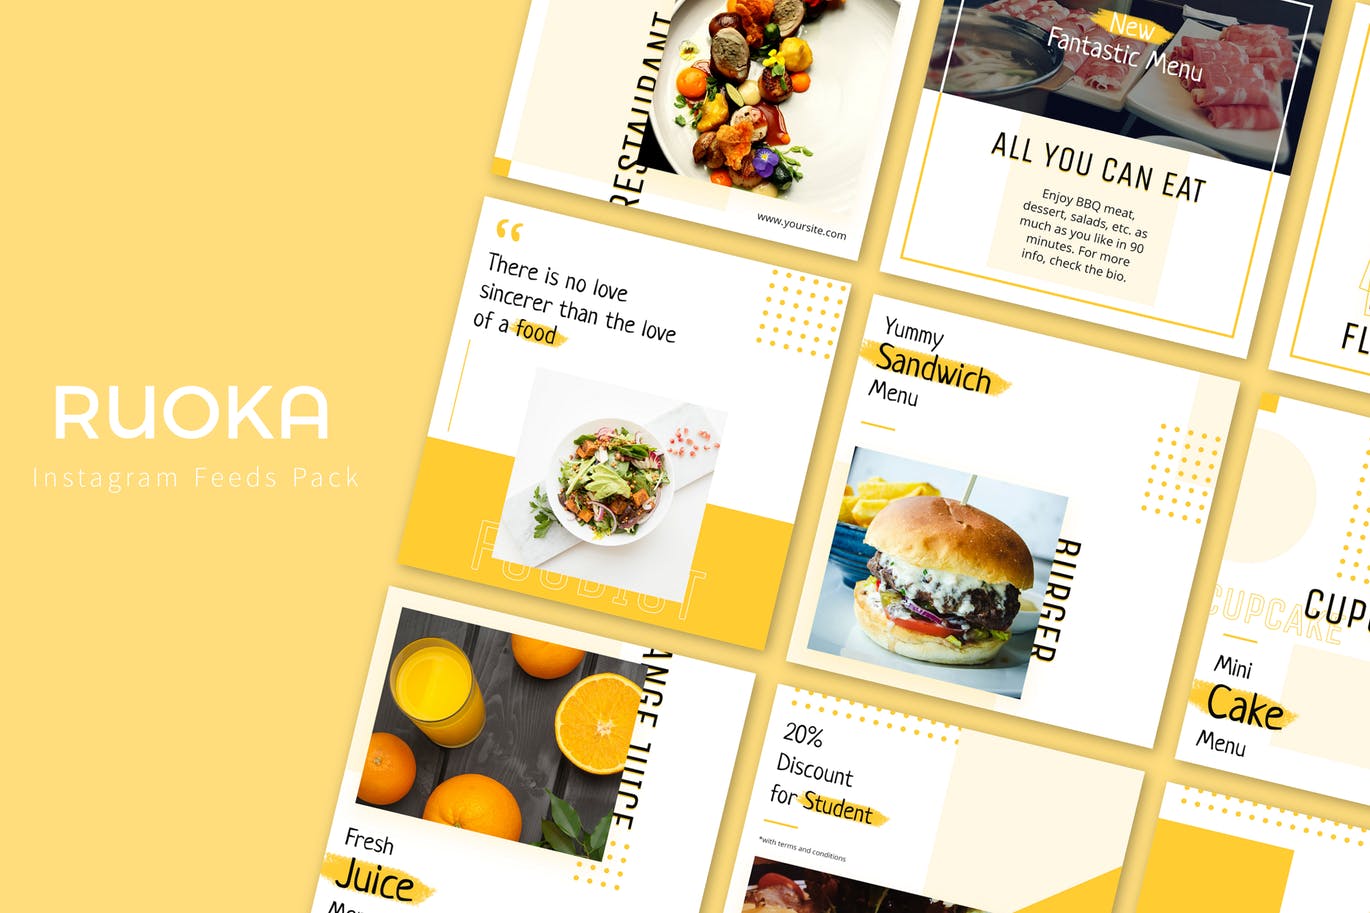 Instagram社交媒体美食主题信息流设计模板16图库精选 Ruoka – Instagram Feeds Pack插图